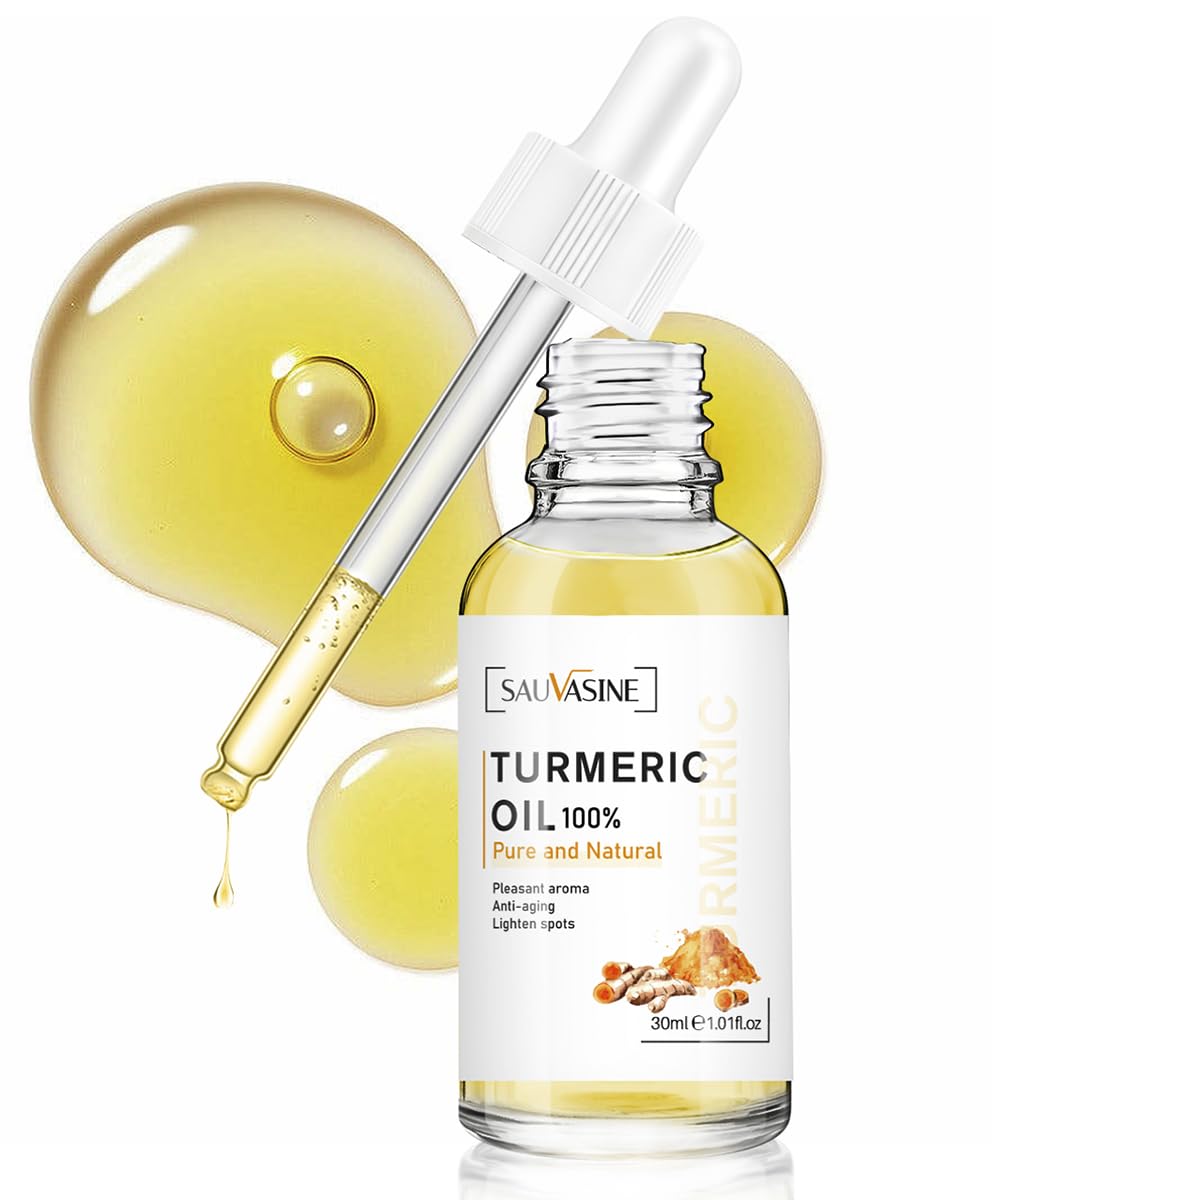 Sauvasine Turmeric Oil 100% Pure and Natural 30ml